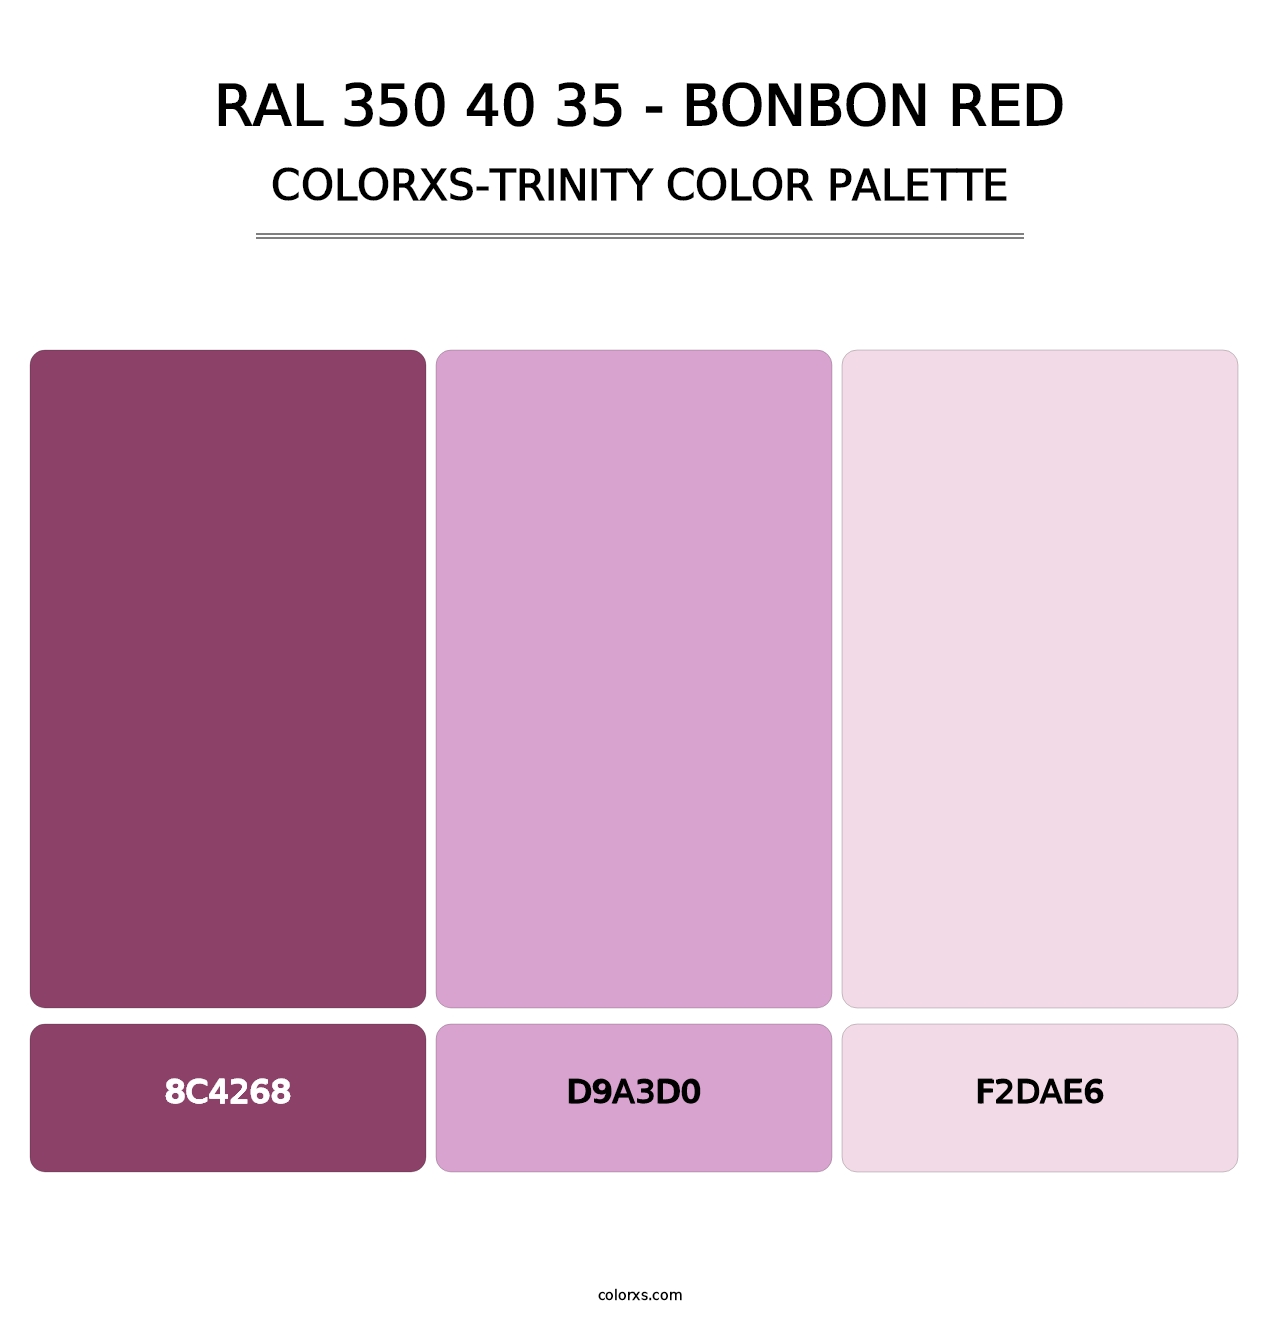 RAL 350 40 35 - Bonbon Red - Colorxs Trinity Palette